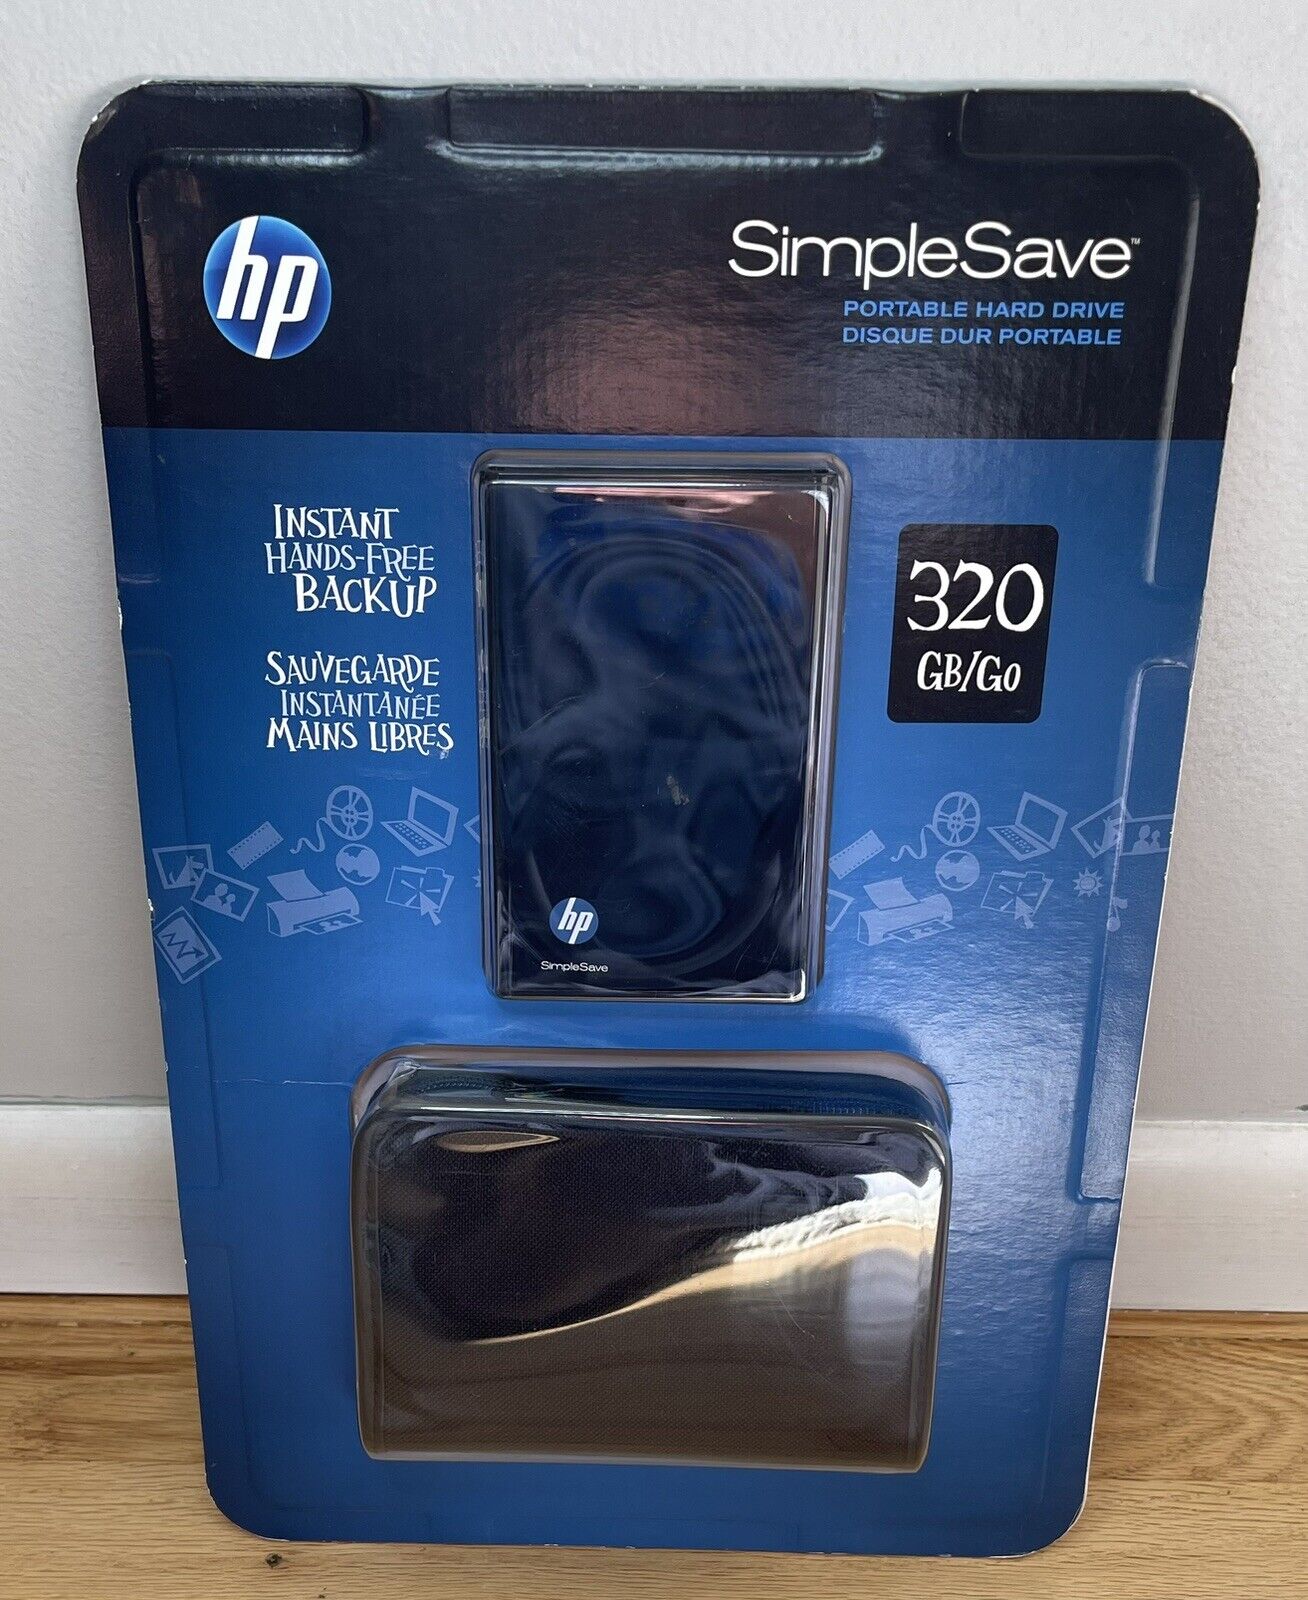 HP SimpleSave 320GB External USB 2.0 Portable Hard Drive